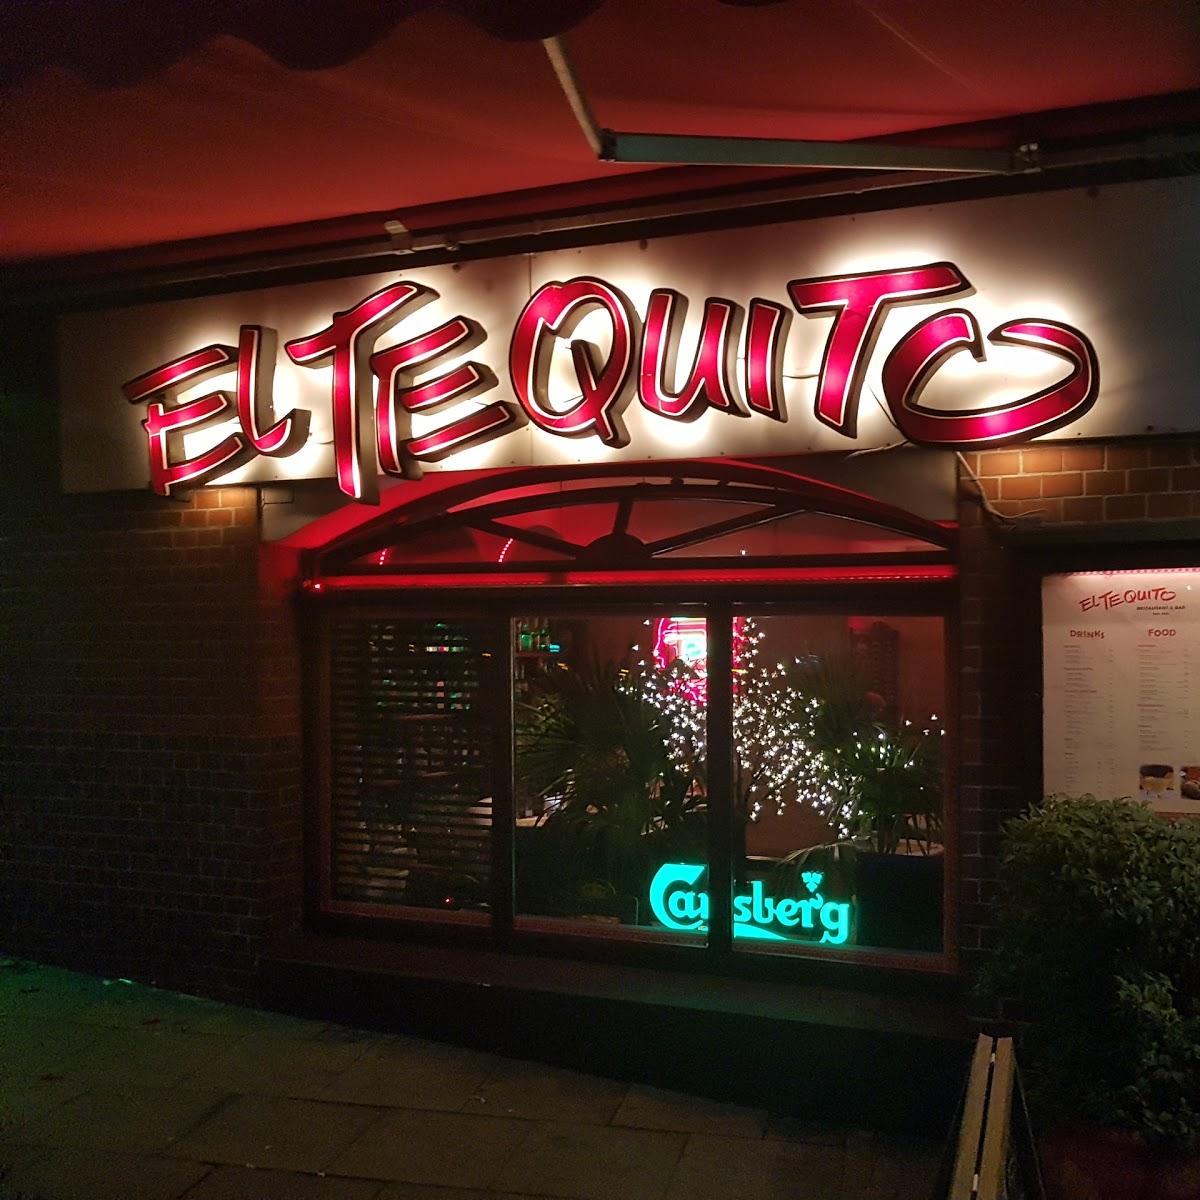 Restaurant "El Tequito" in Hamburg